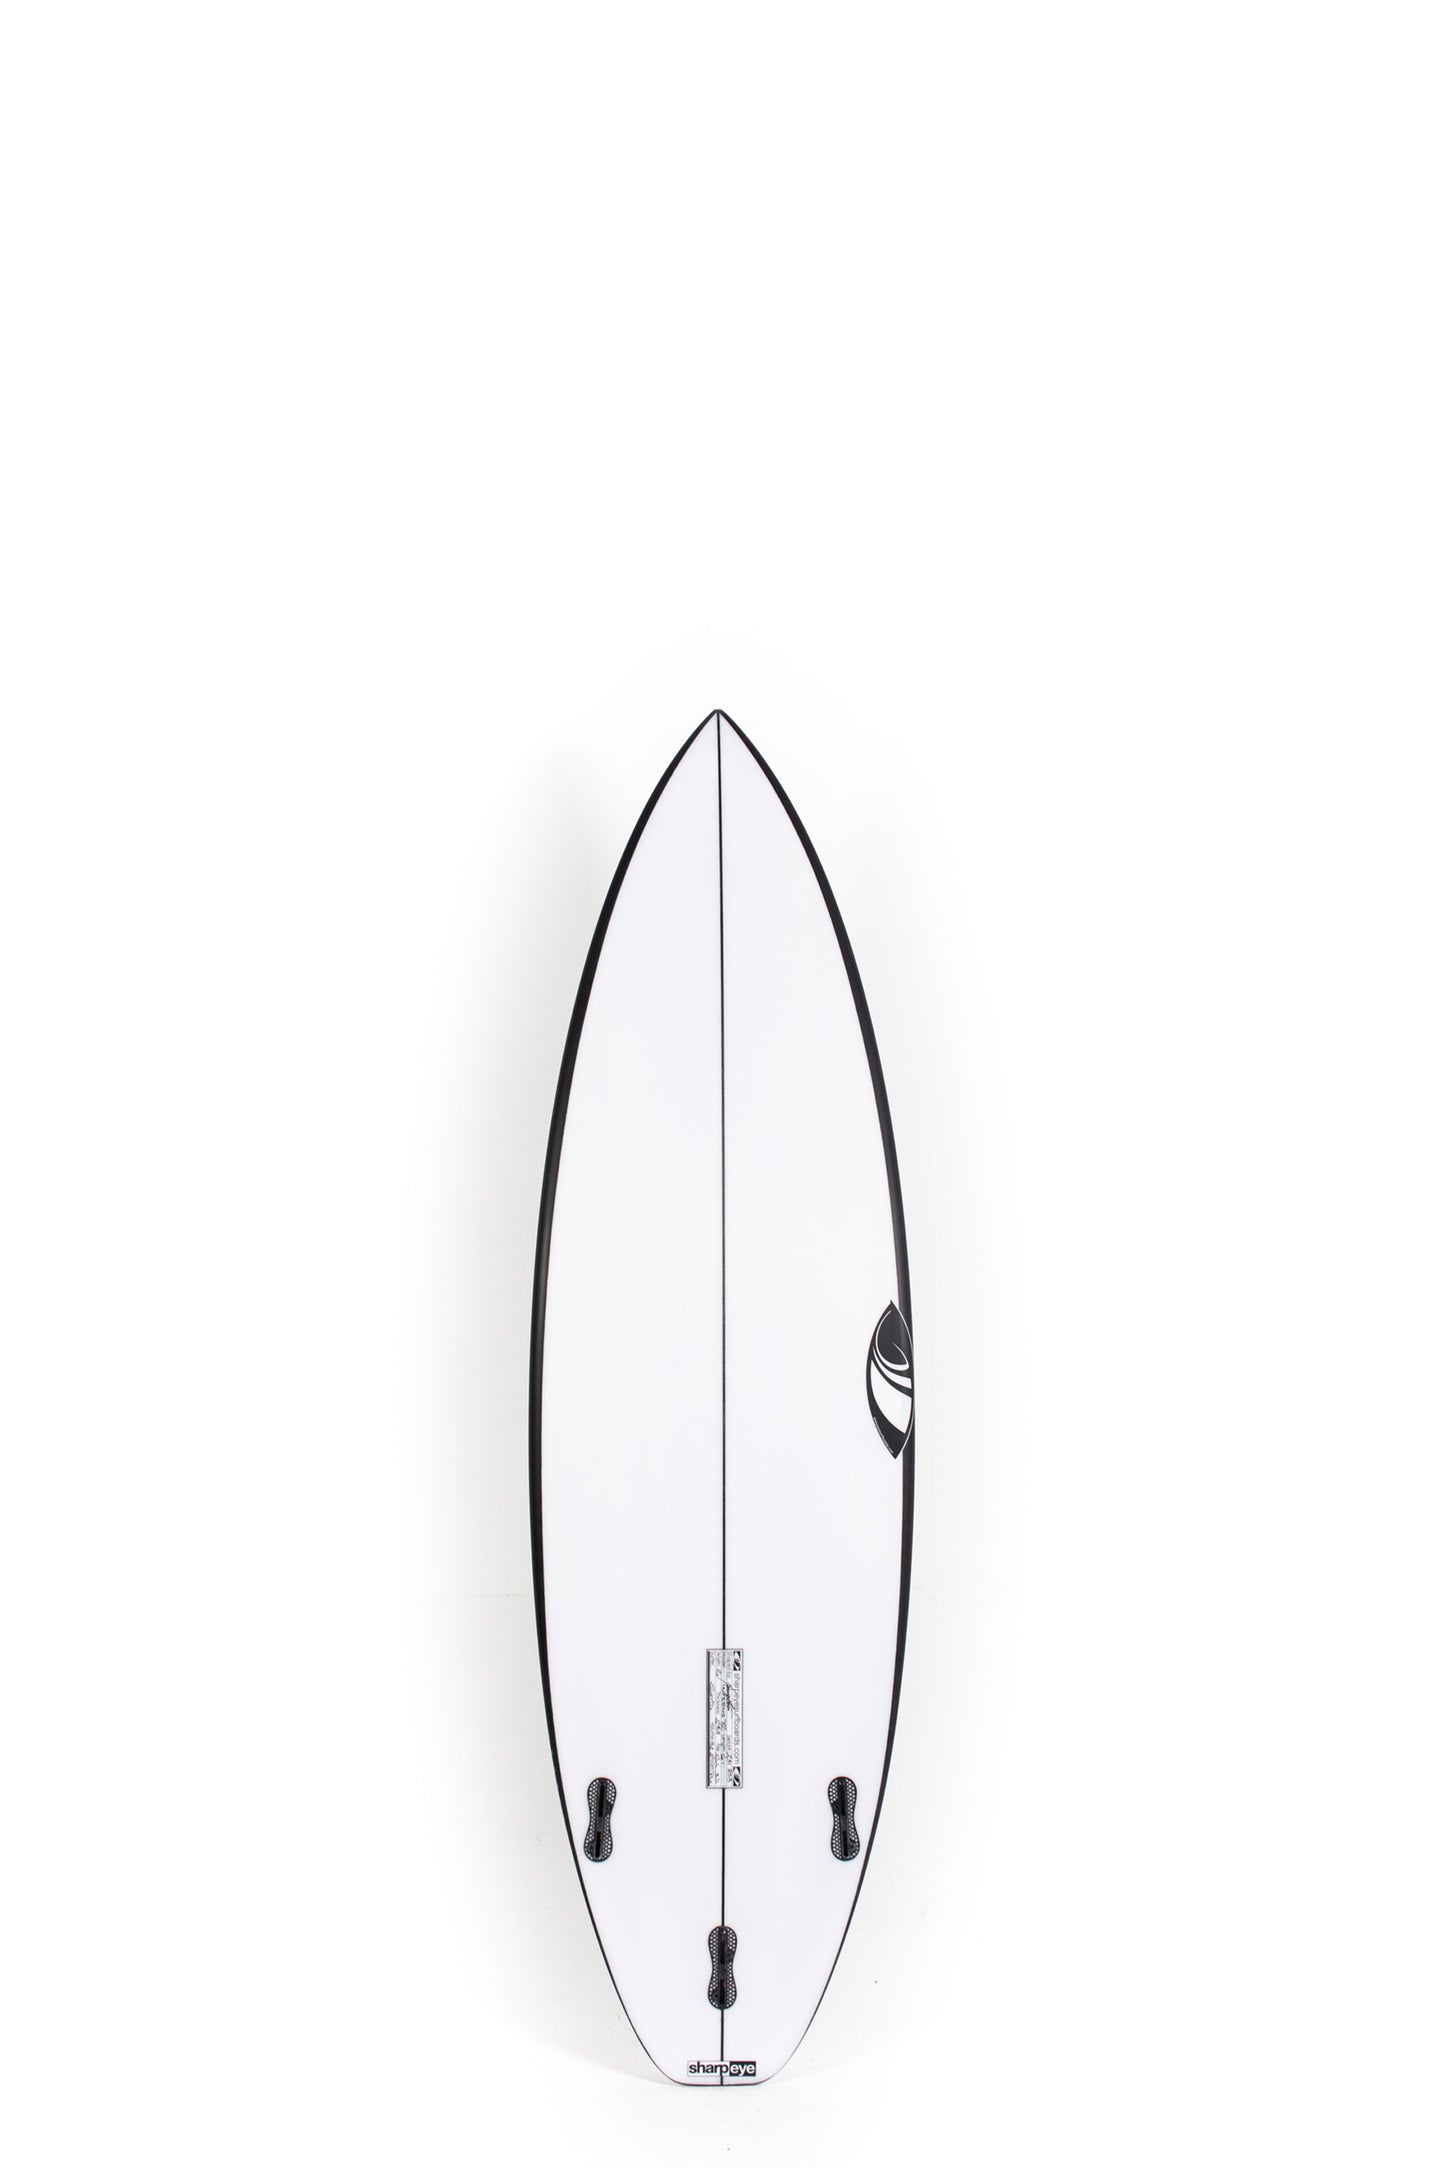 Sharp Eye Surfboards - INFERNO 72 by Marcio Zouvi 6'1